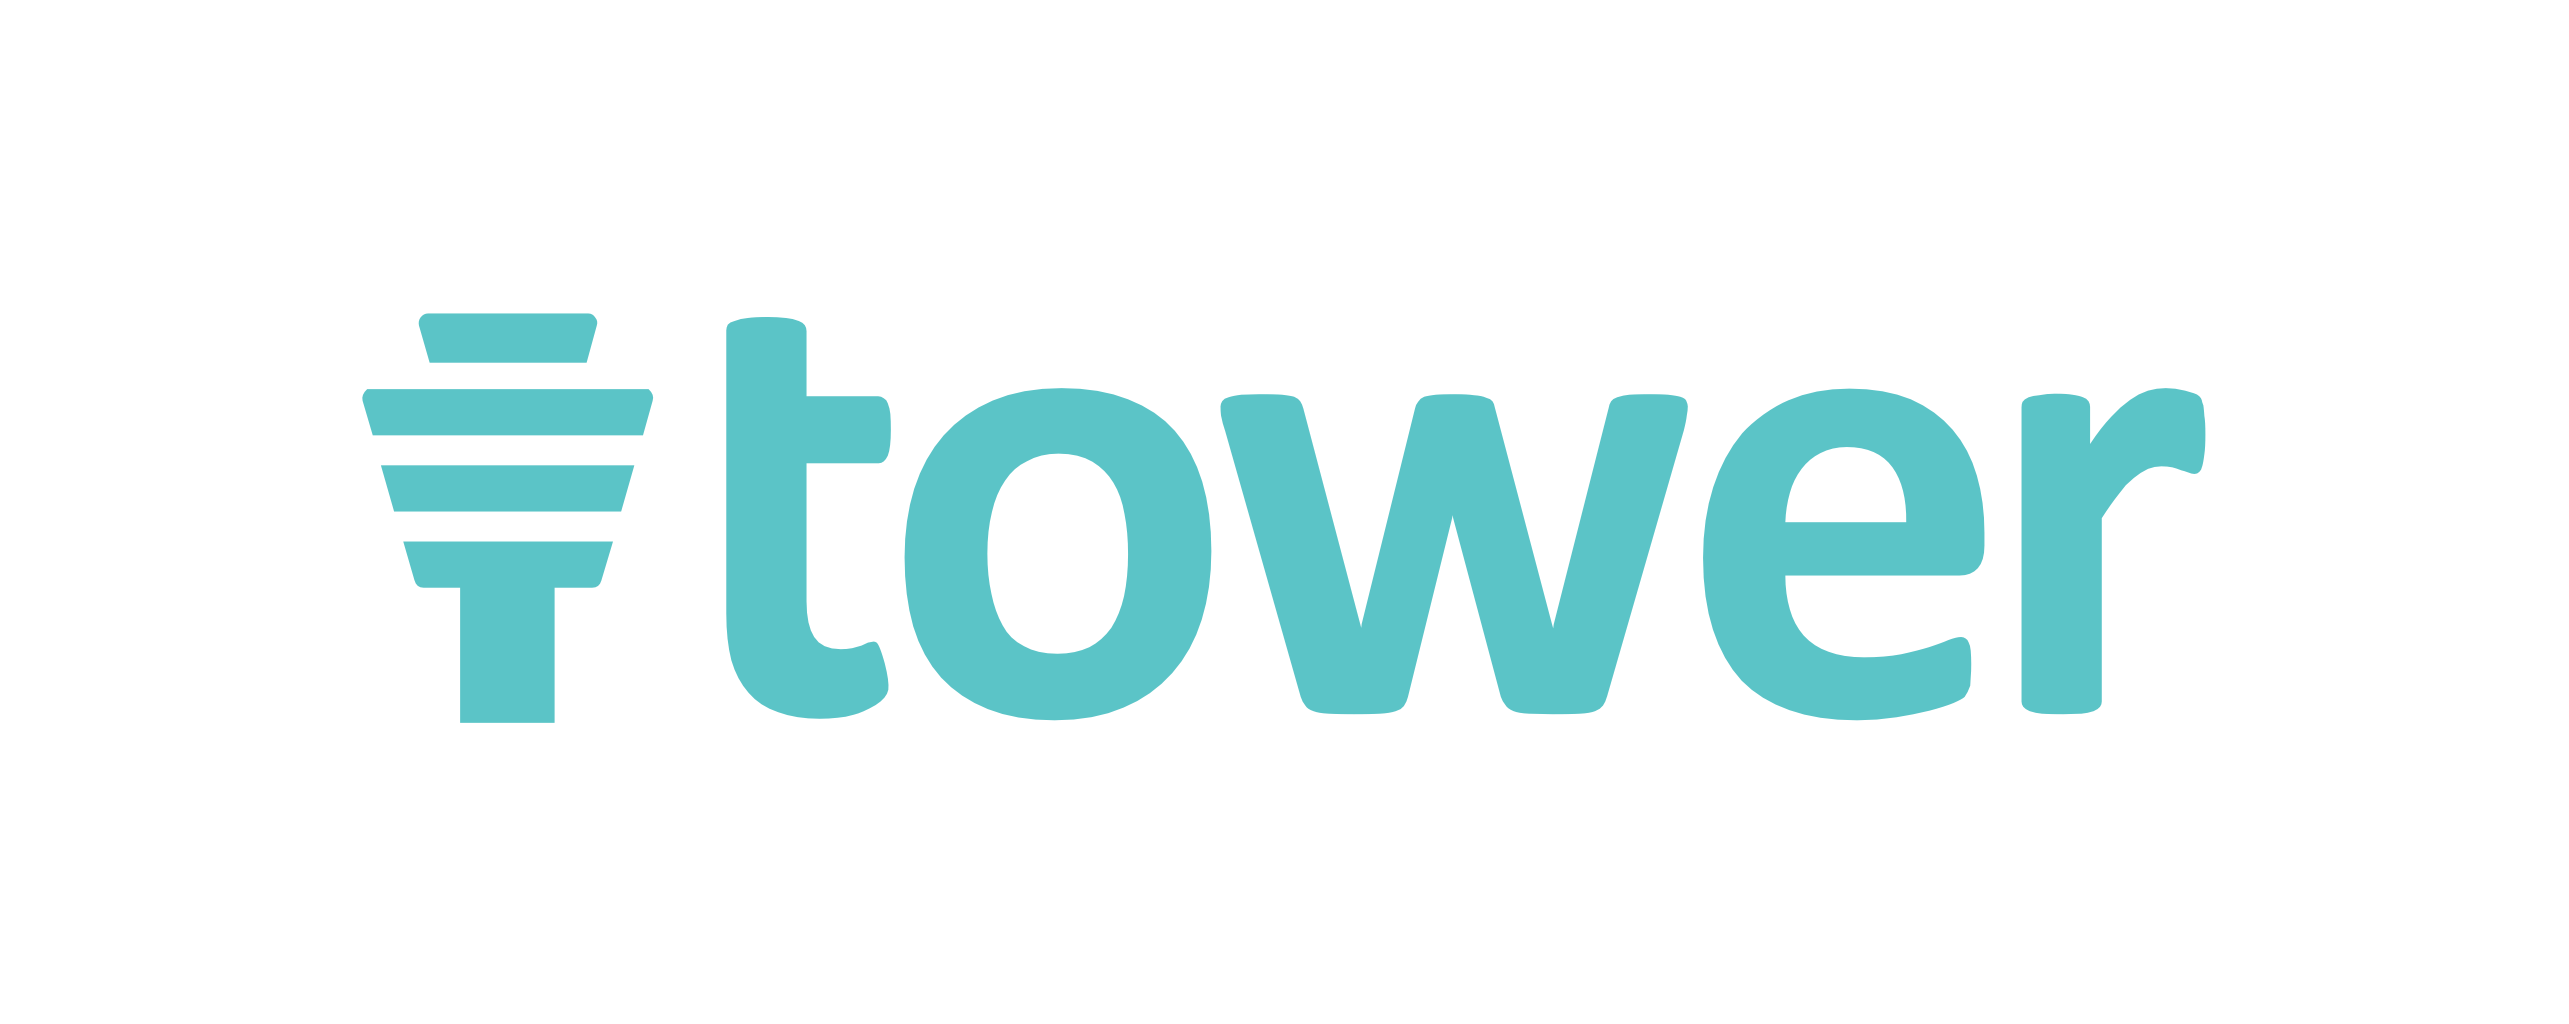 logo-tower.png